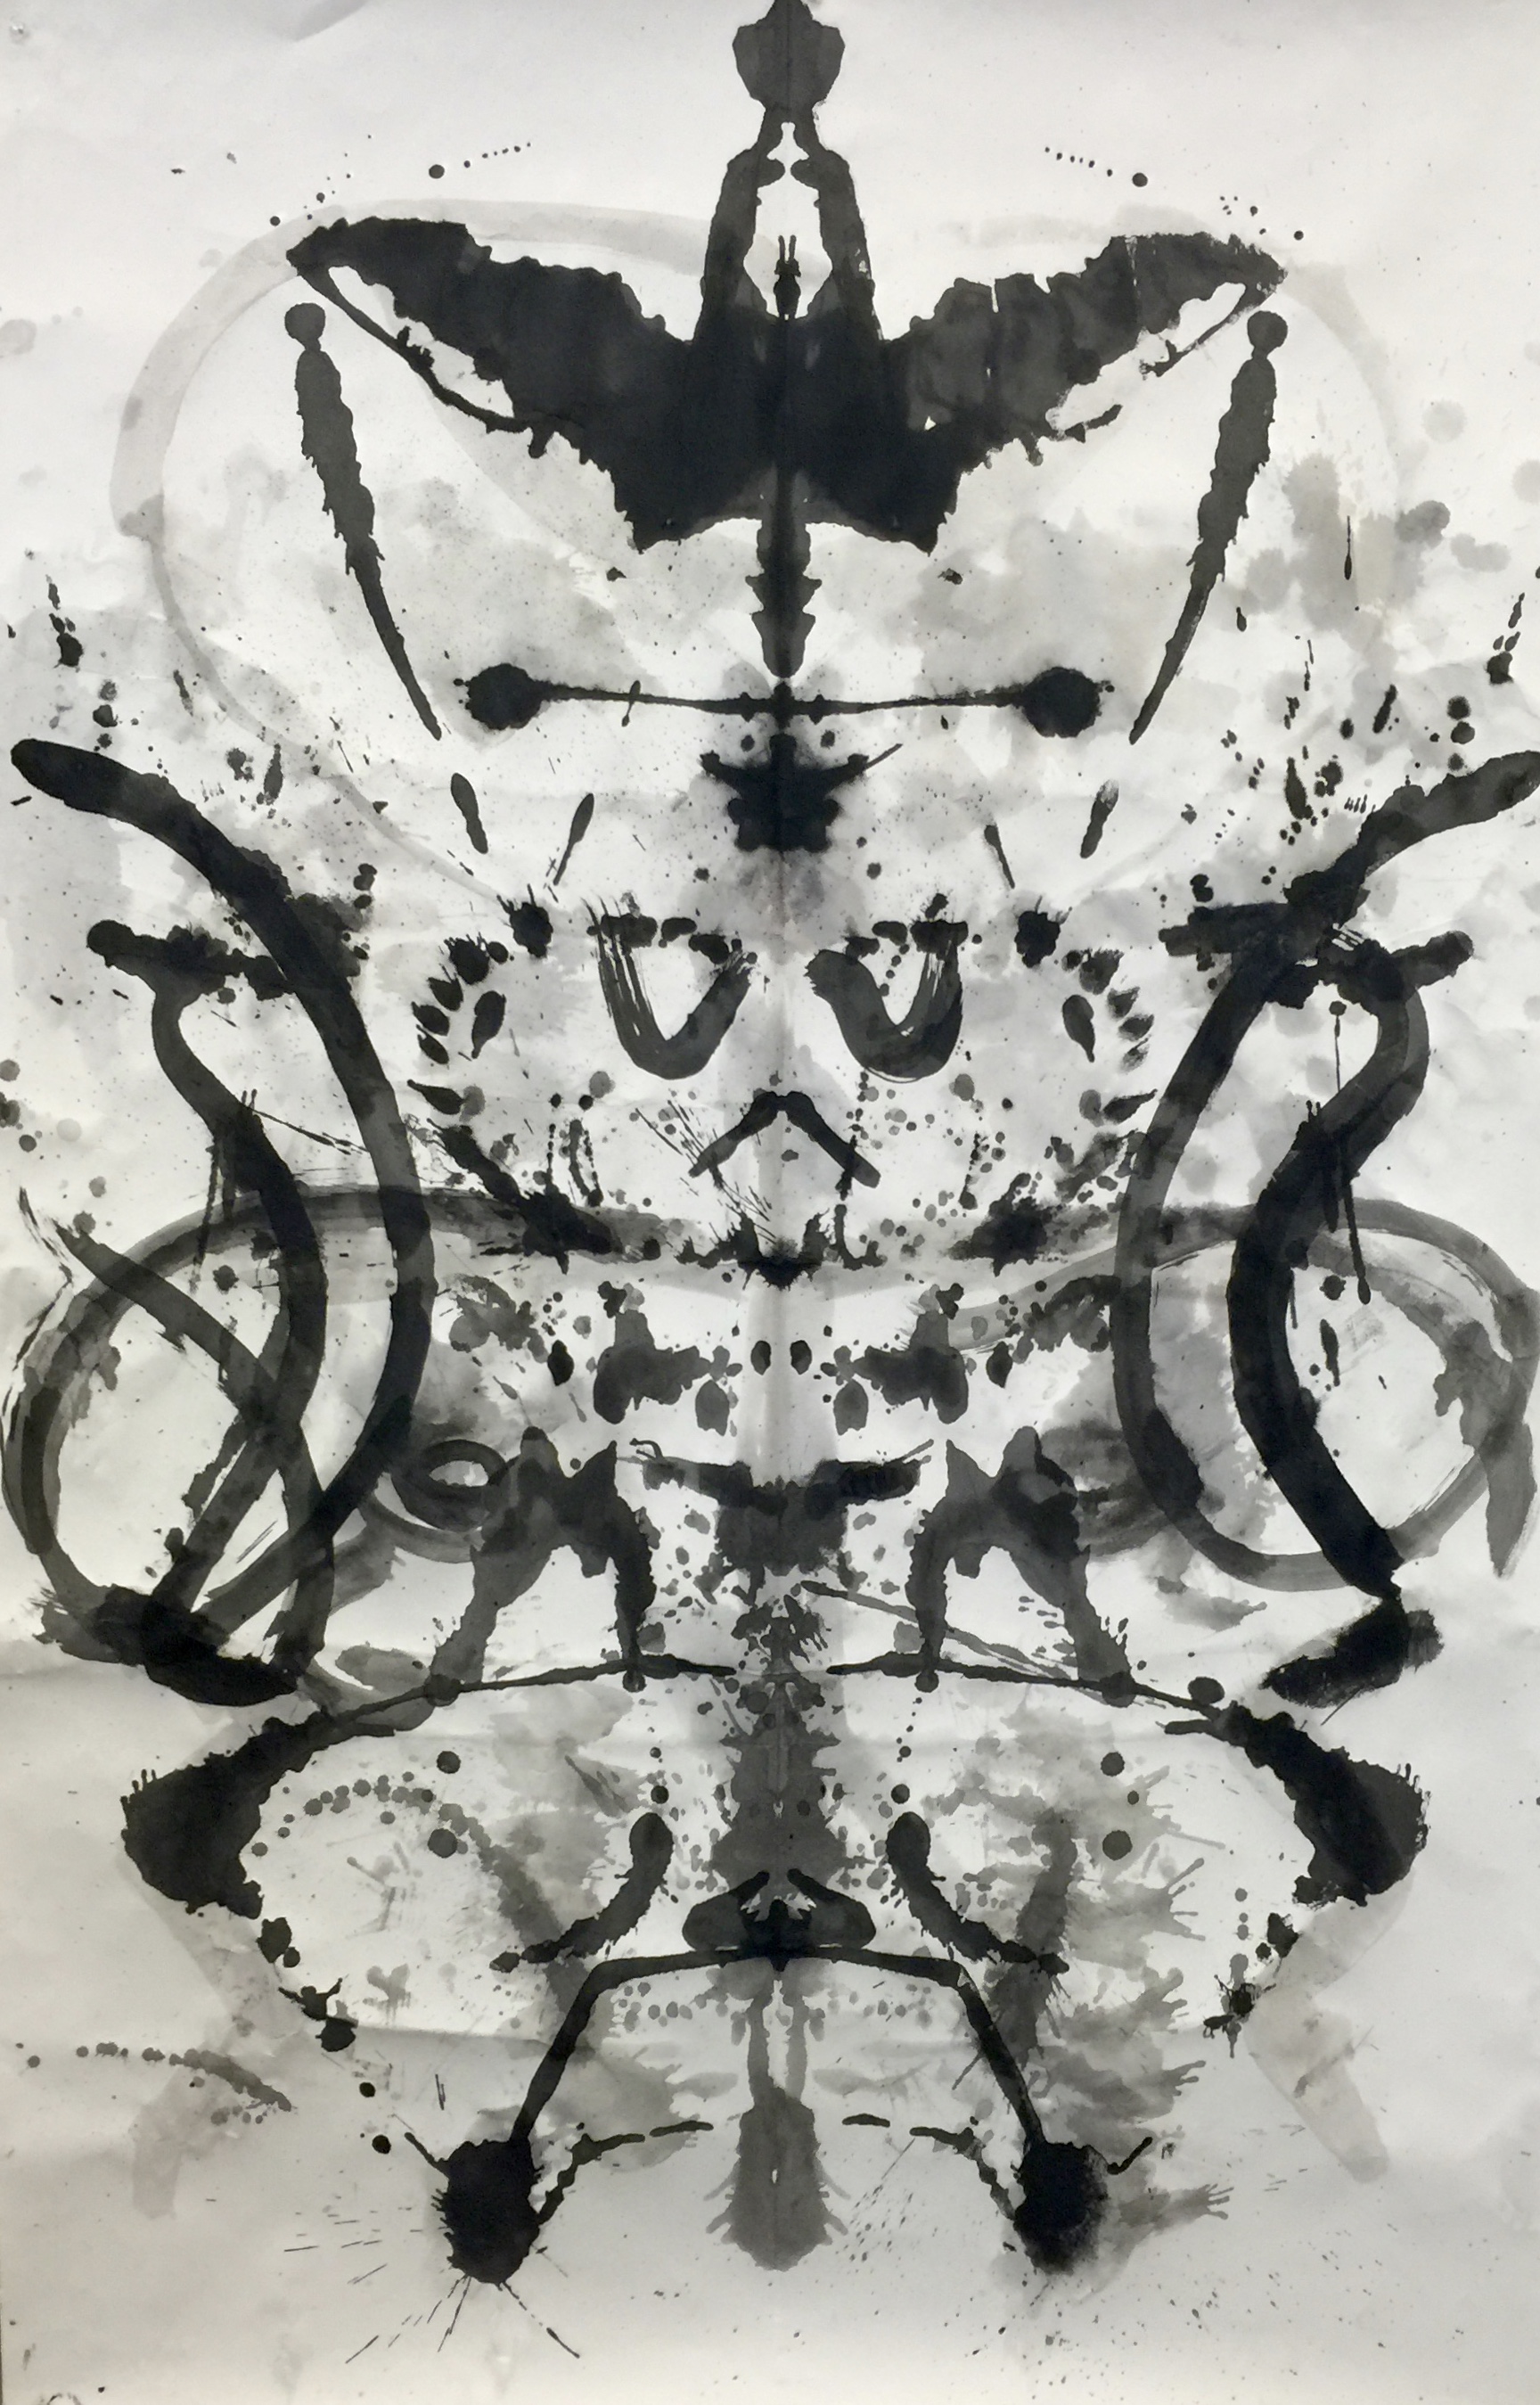 Abstract Shapes: Inkblot Painting Close-Ups